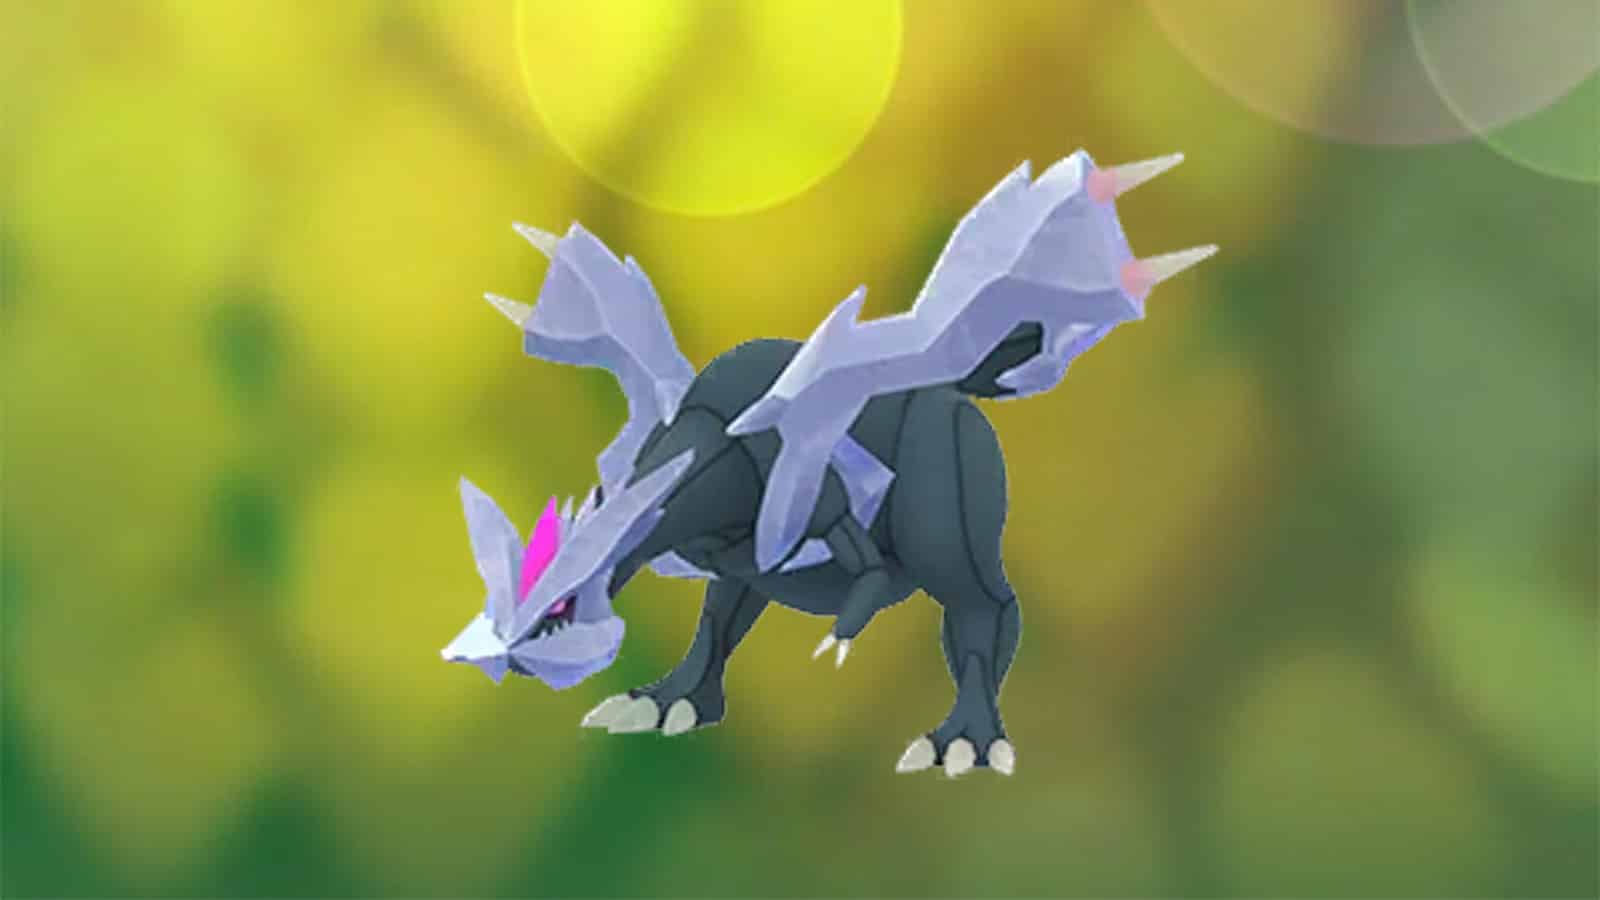 Pokémon Go Kyurem weakness and best moveset raid guide - Polygon